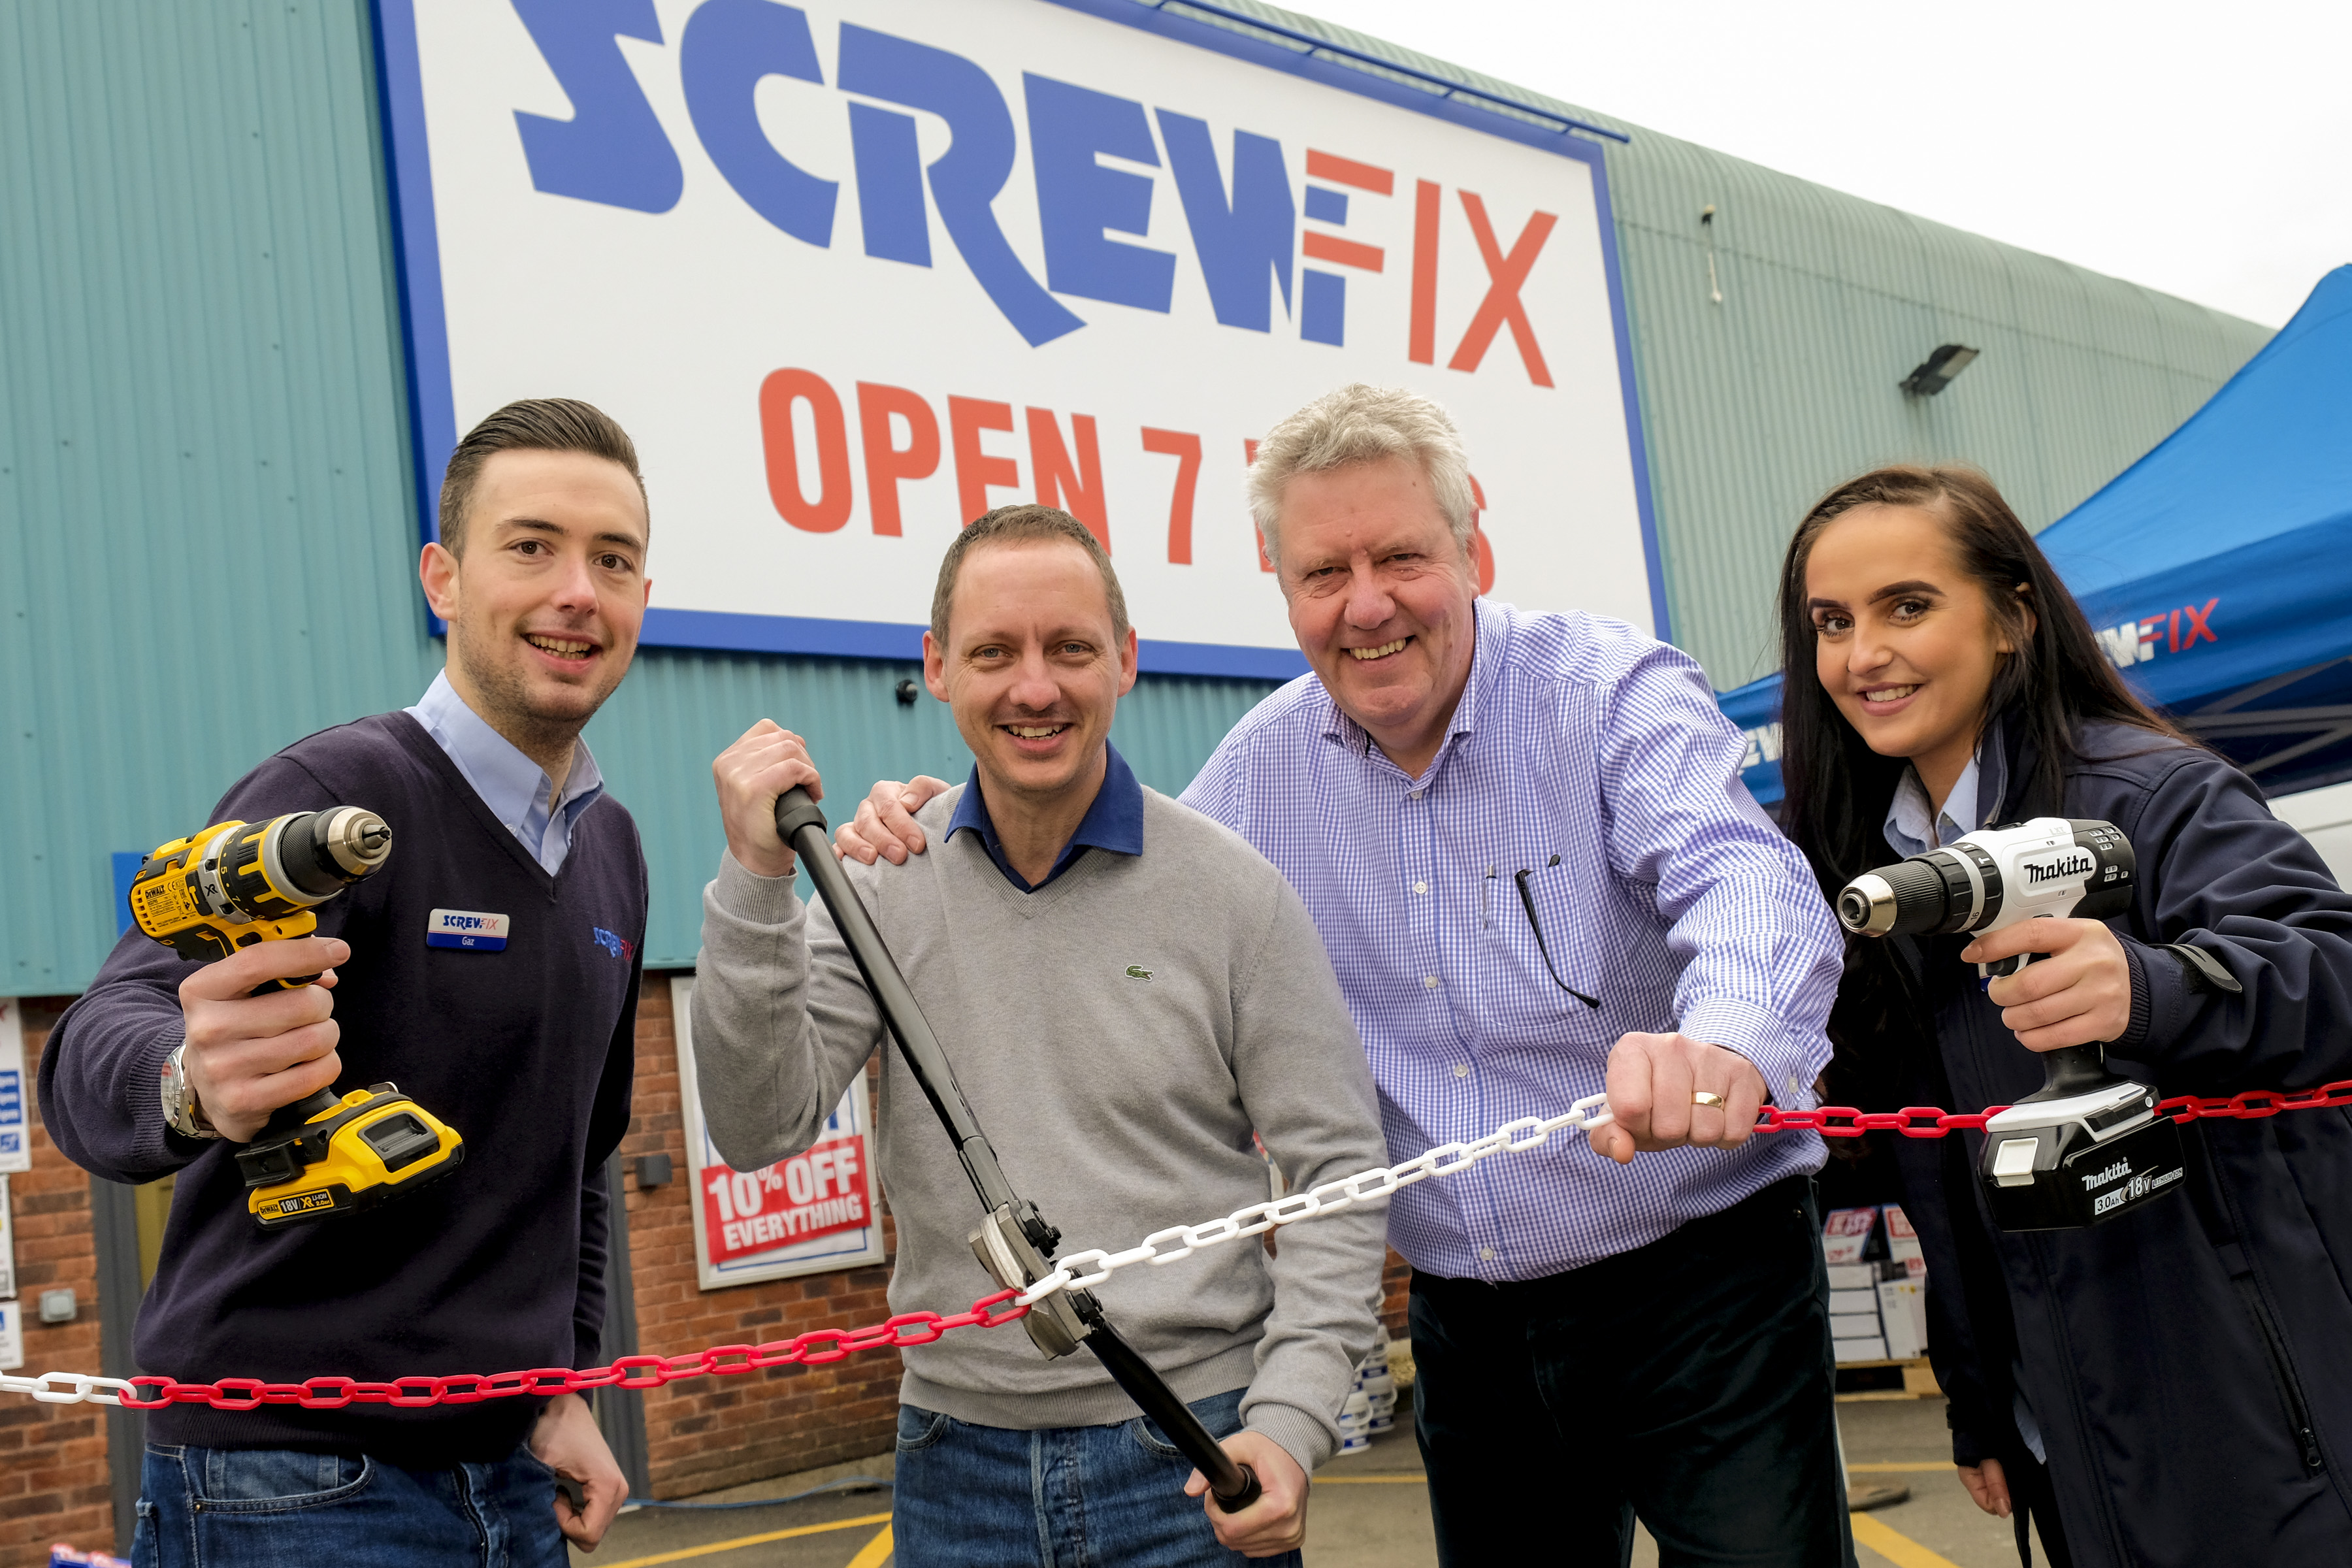 Northwich celebrates new Screwfix store opening